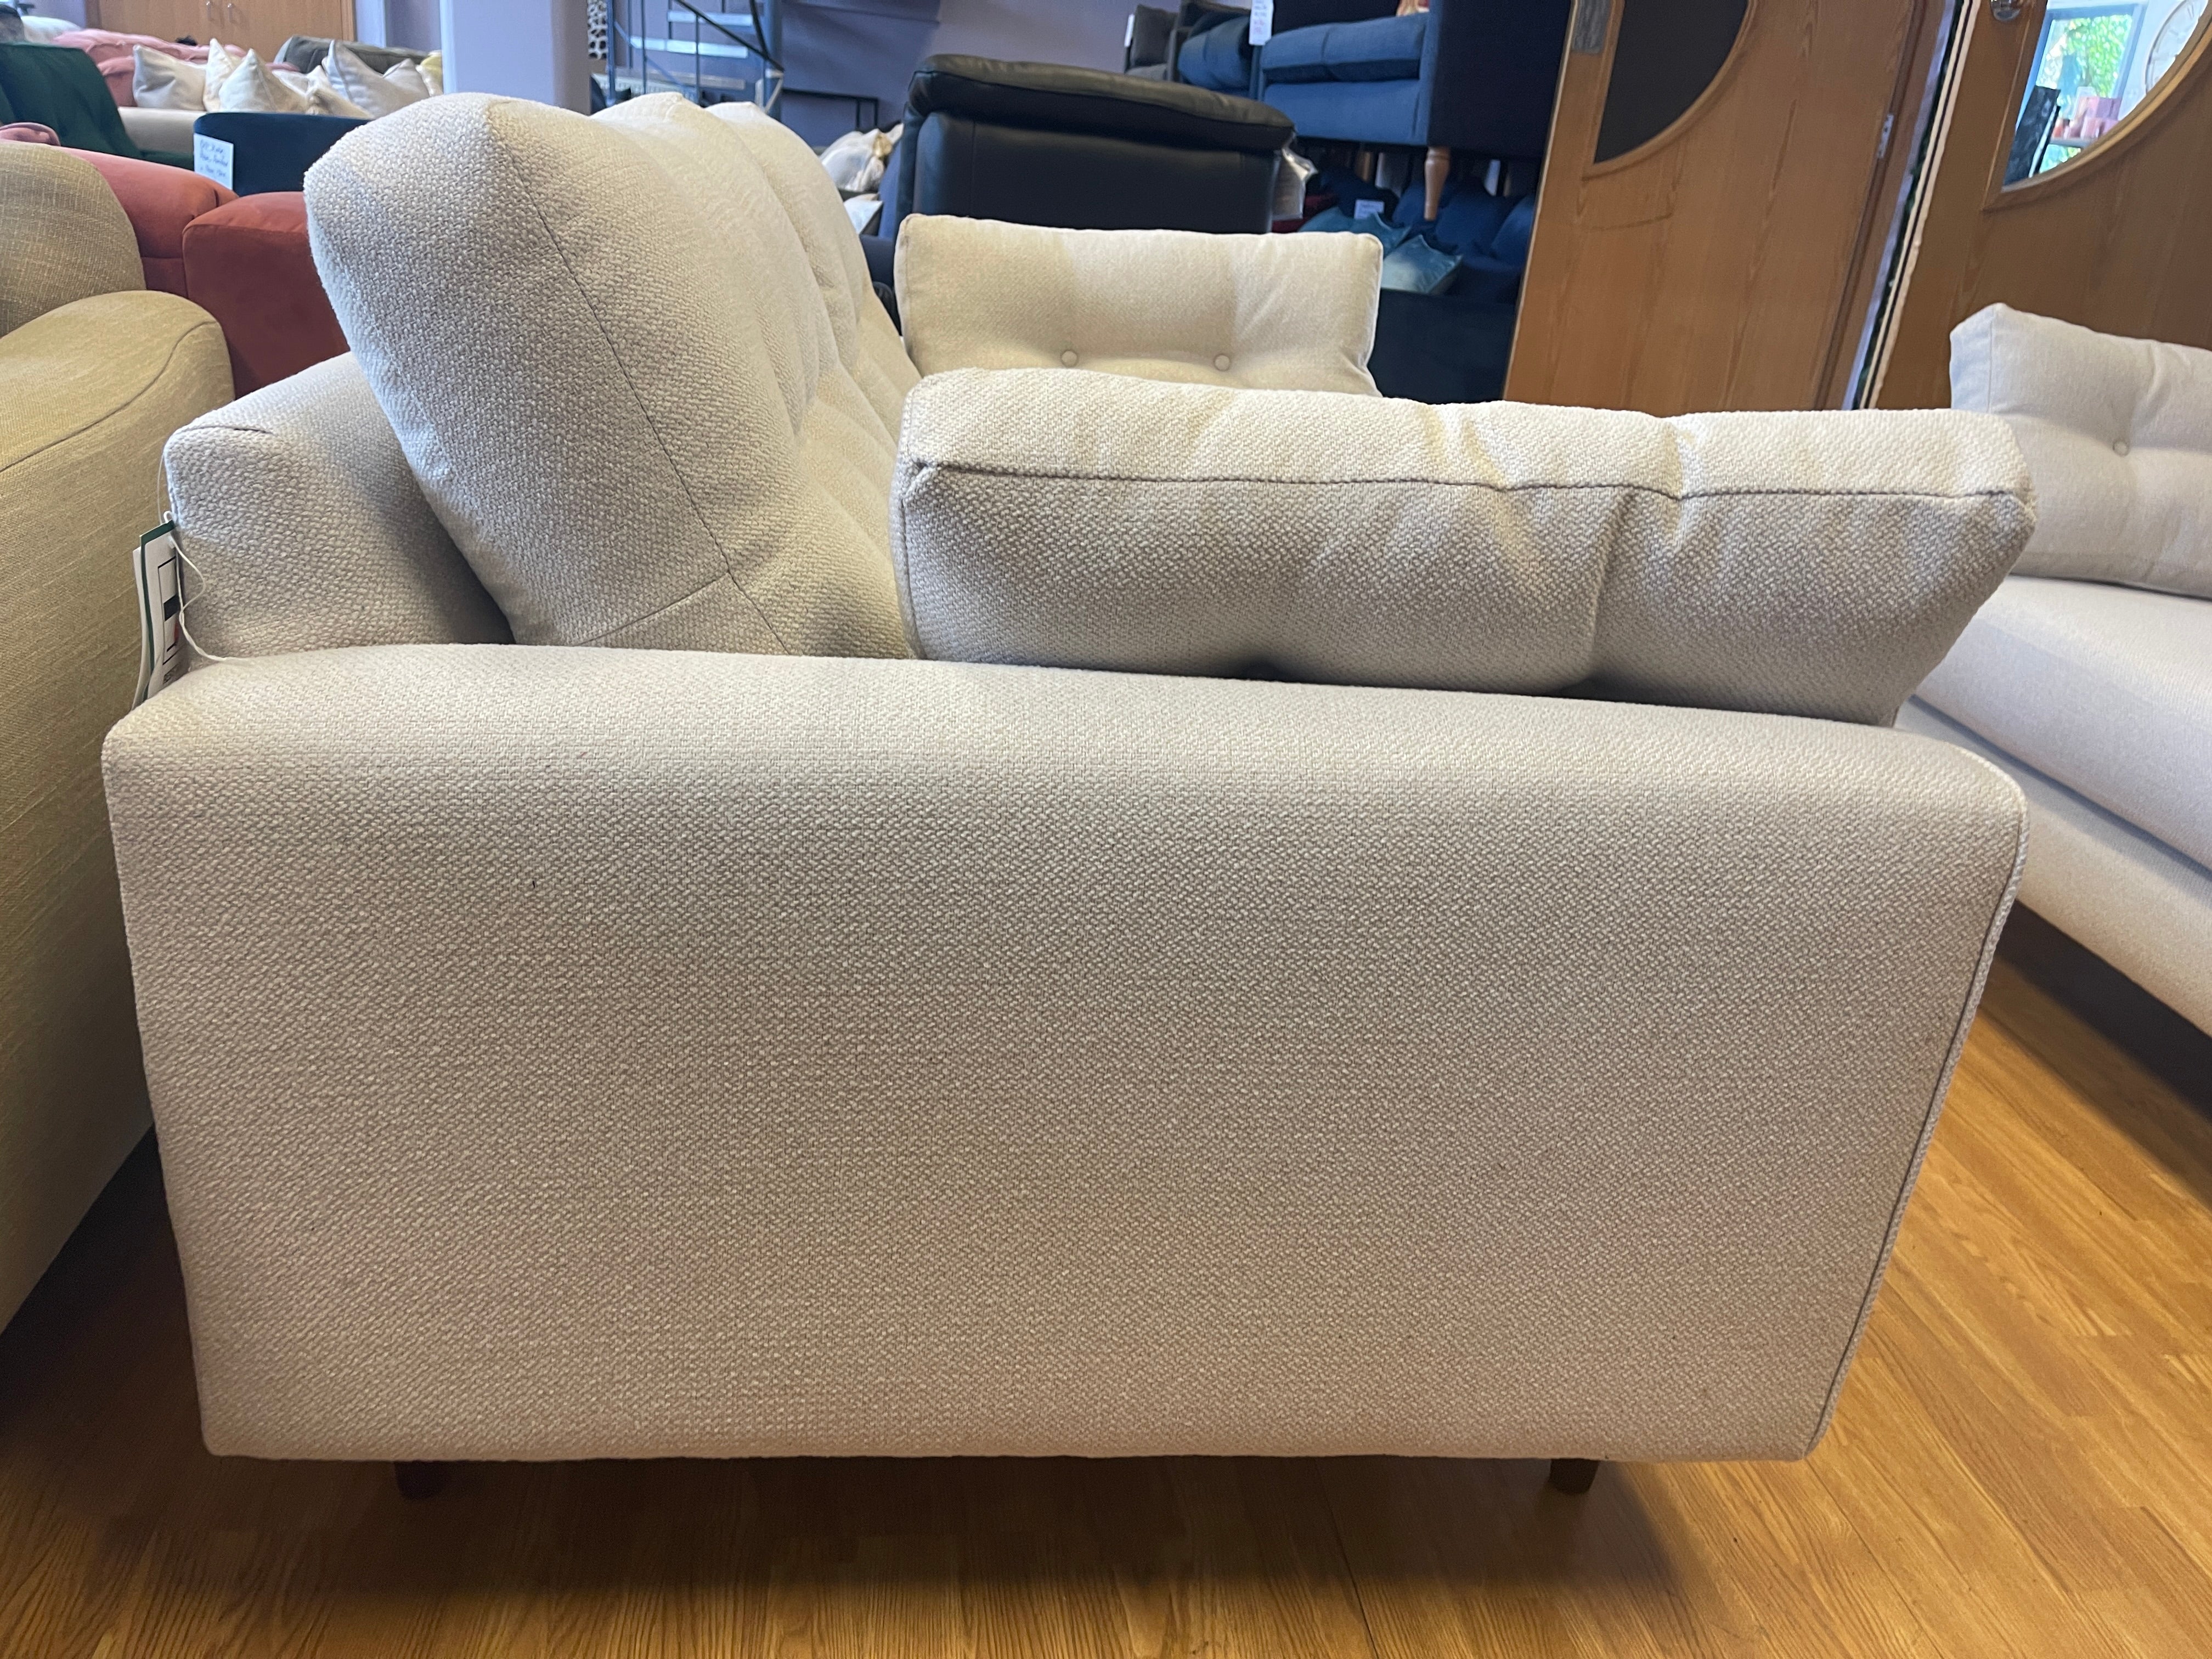 SOFOLOGY MAYA 2 seater standard back sofa in ivory cream basket weave fabric